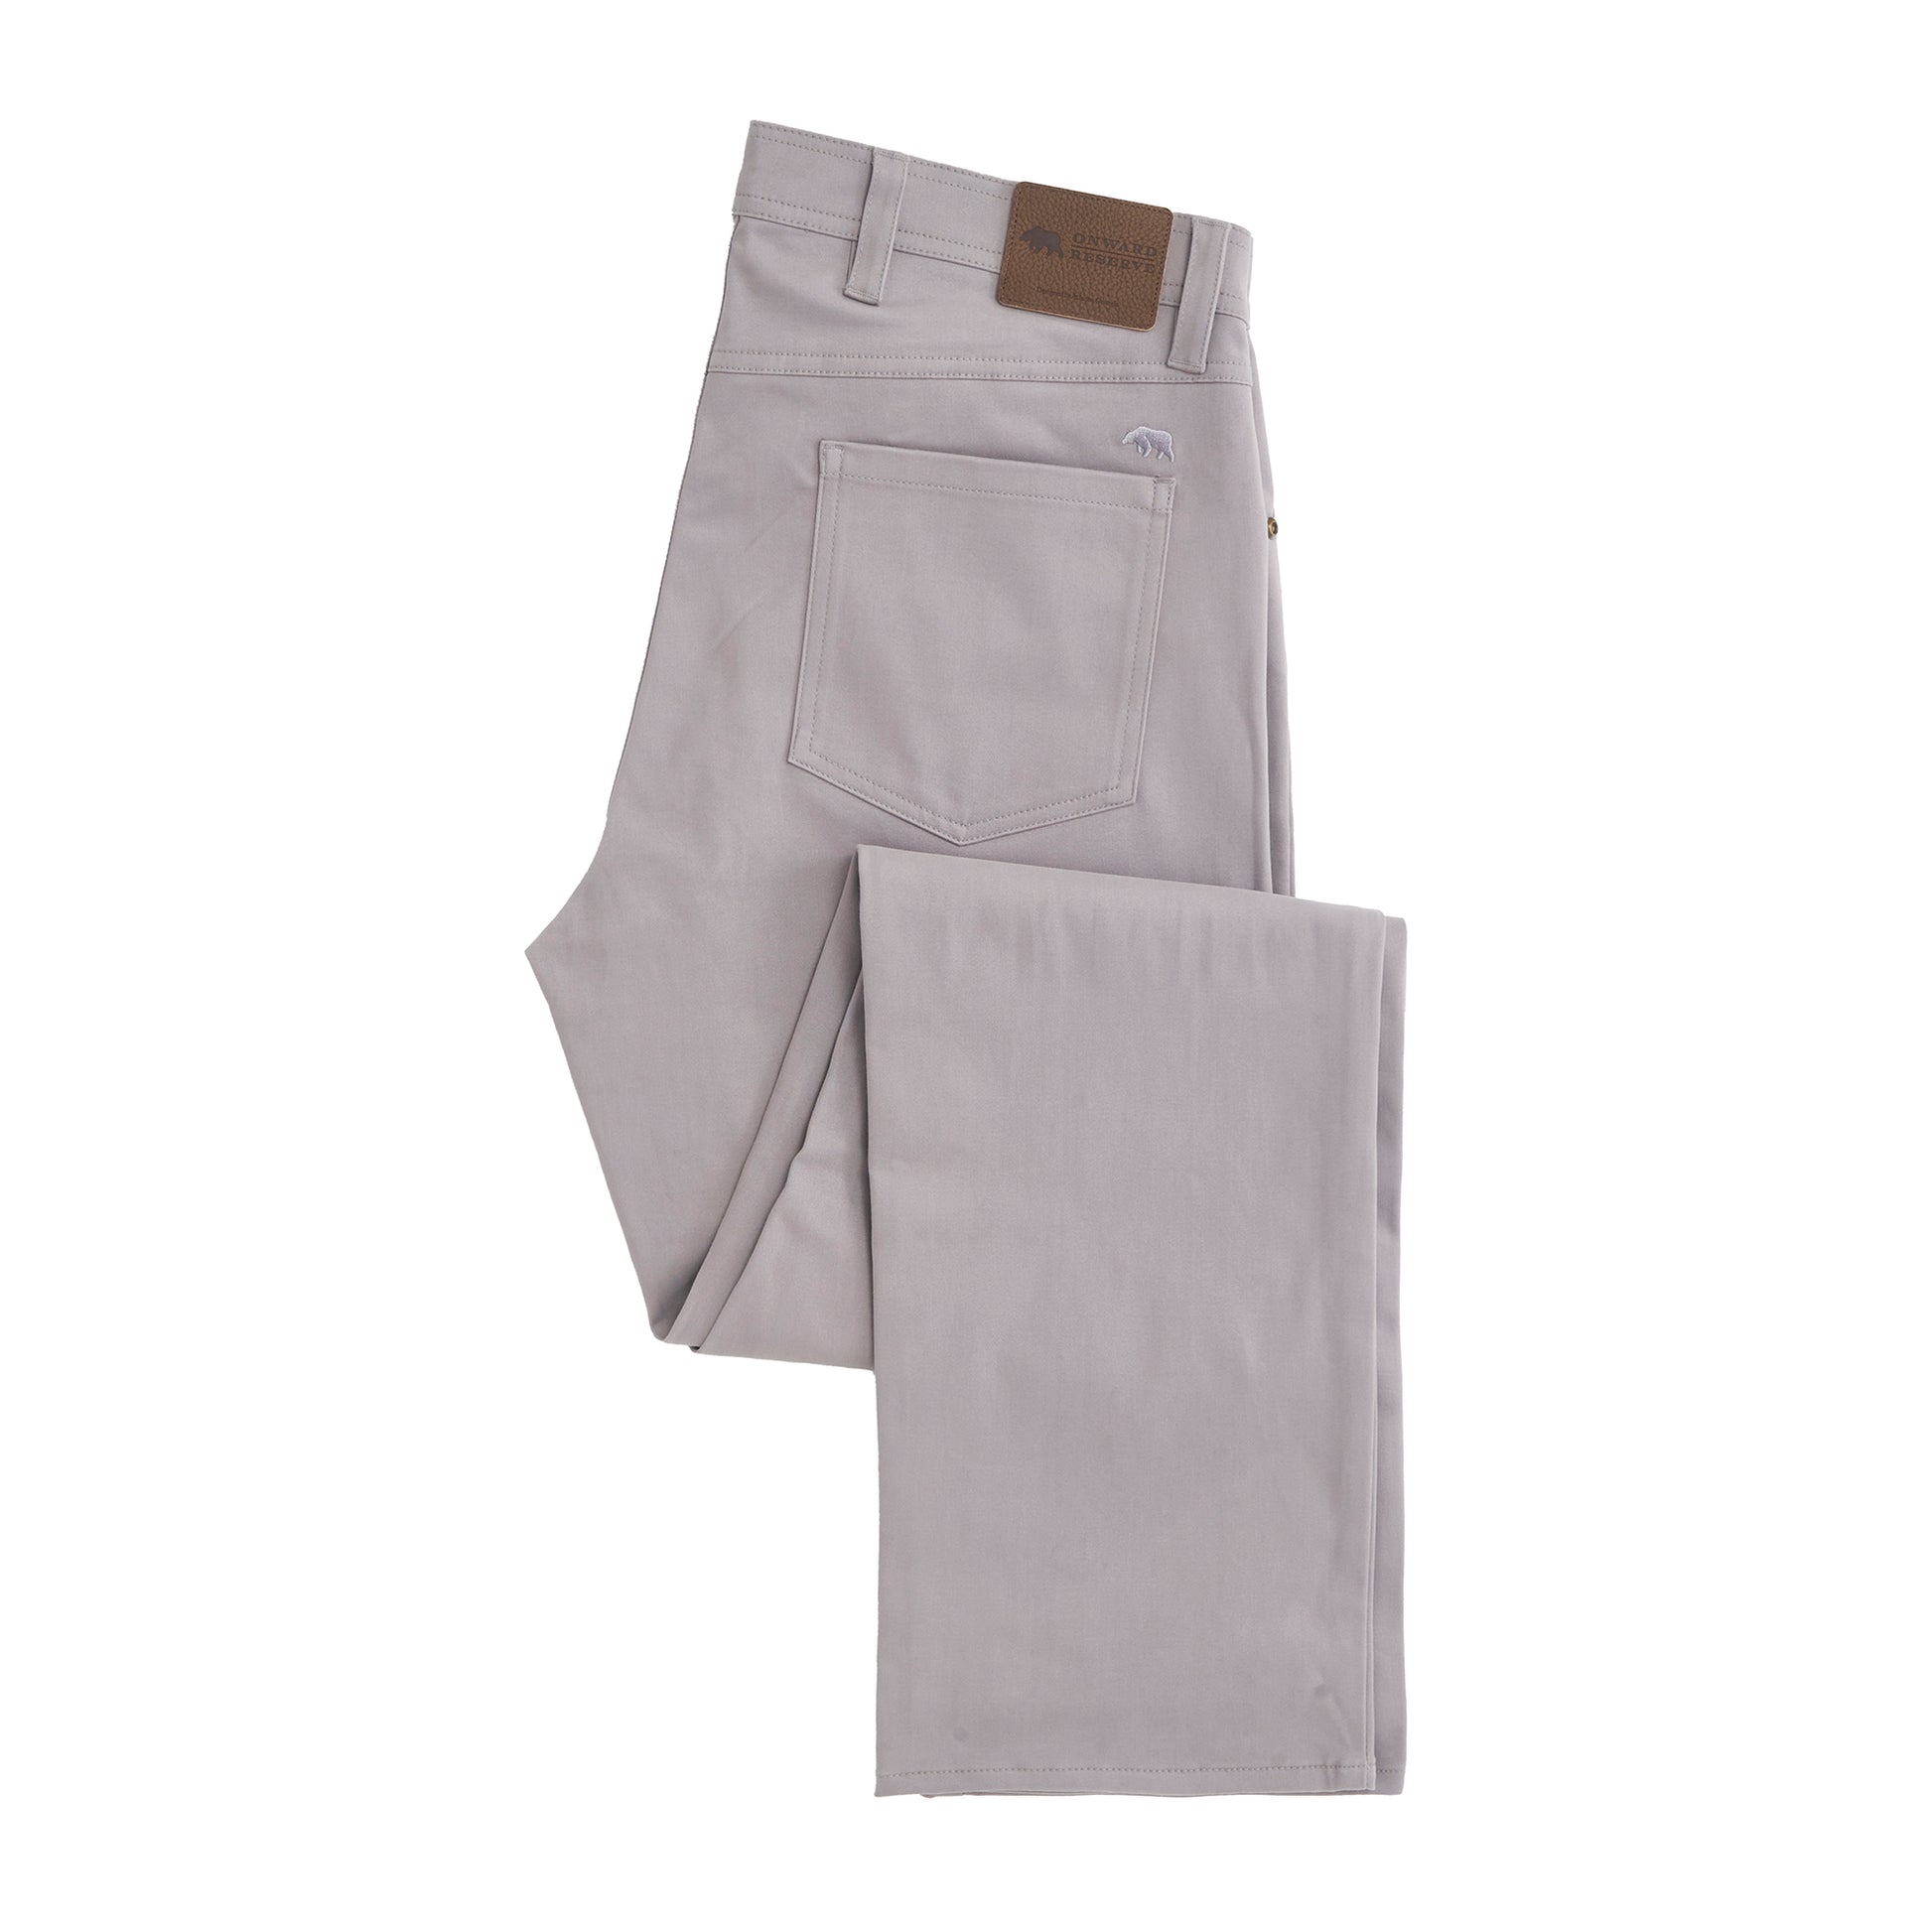 Classic Five Pocket Pant Steel Grey – Onward Reserve